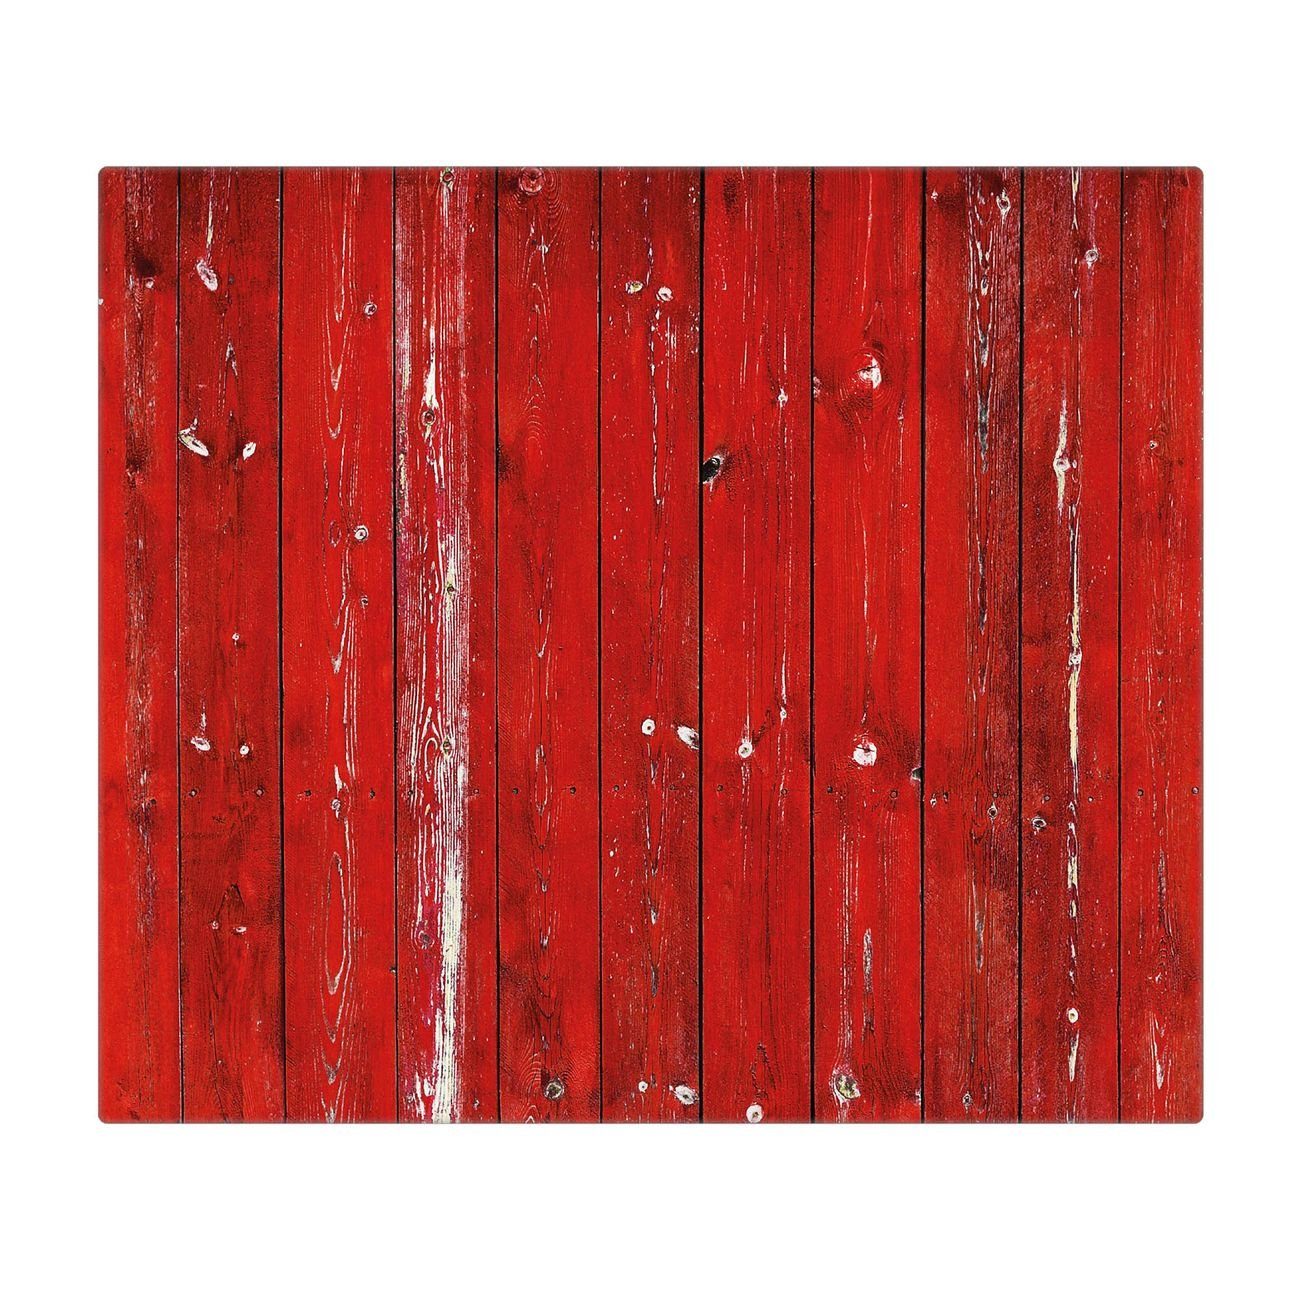 tlg., Gummifüßchen) Rote Holzlatten, 1 banjado Glas Herd-Abdeckplatte (gehärtet, inkl. selbstklebende